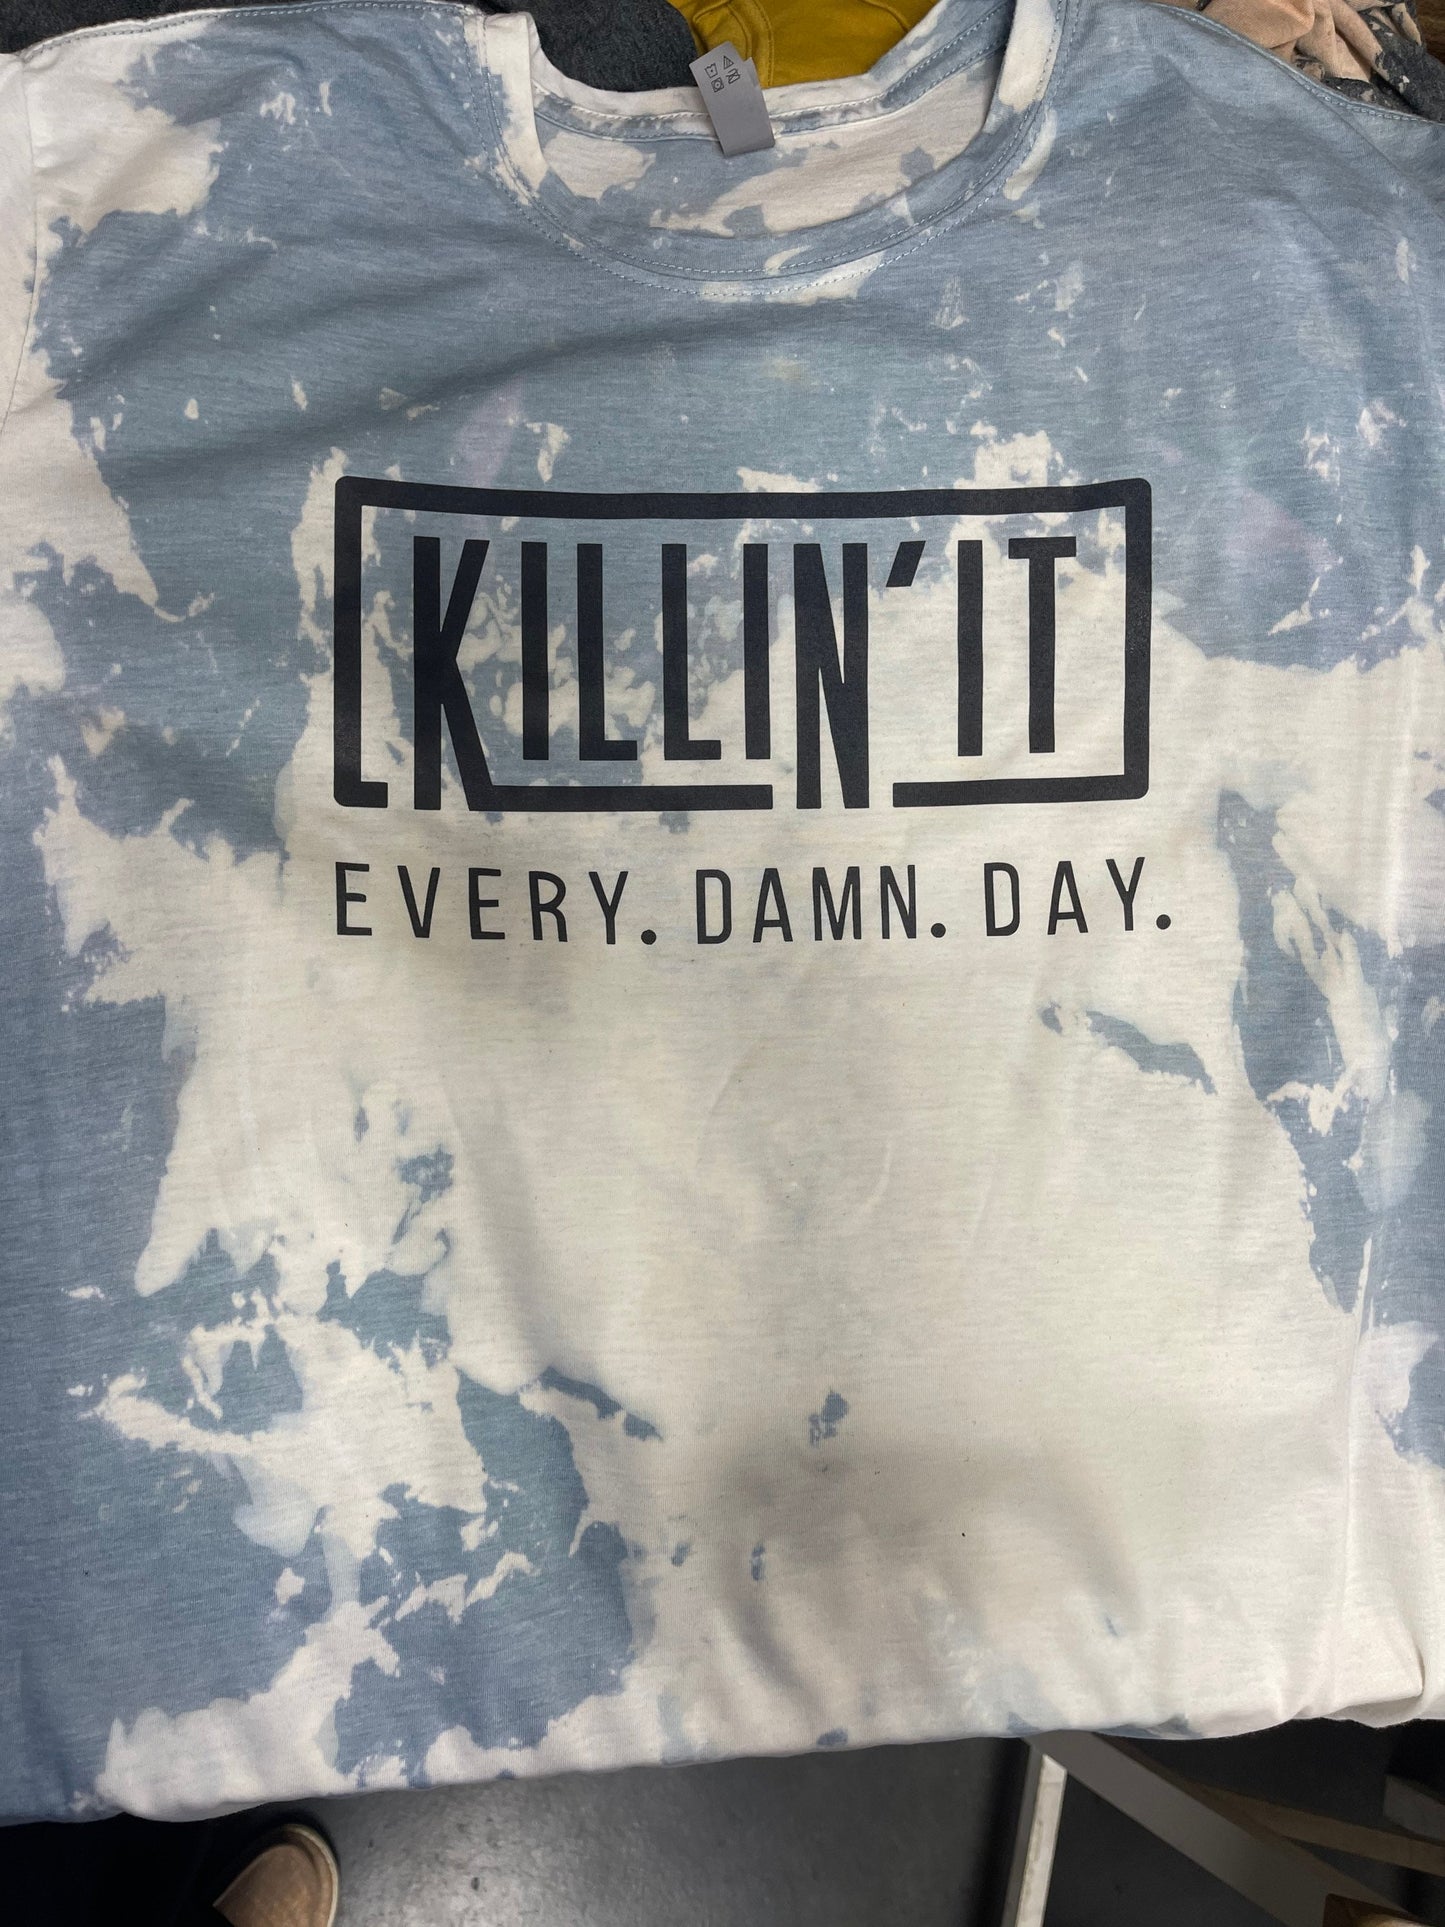 Killin’ it everyday bleached tee